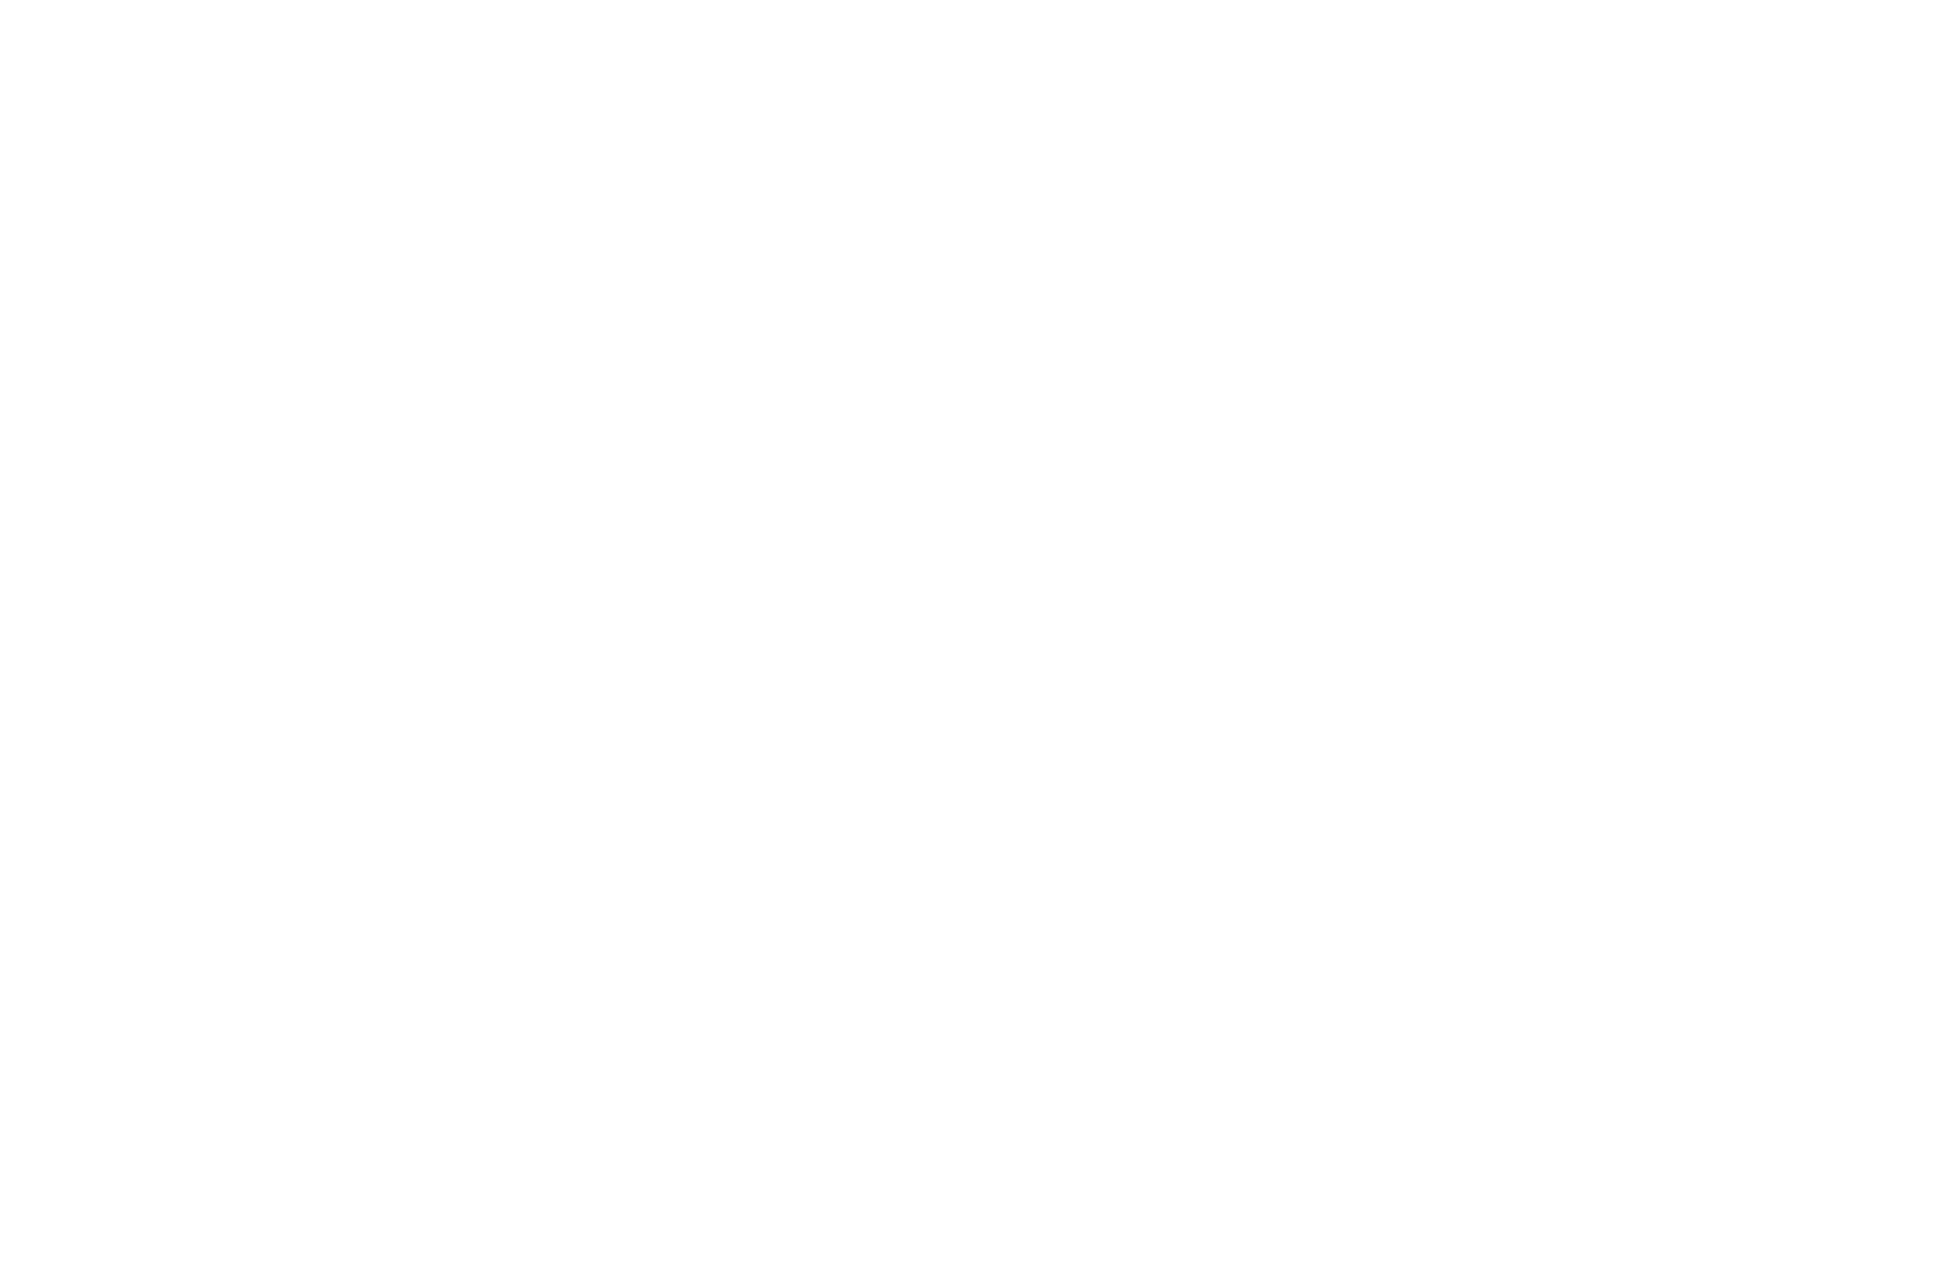 Bowery Film Festival Best Music Video Spring 2019